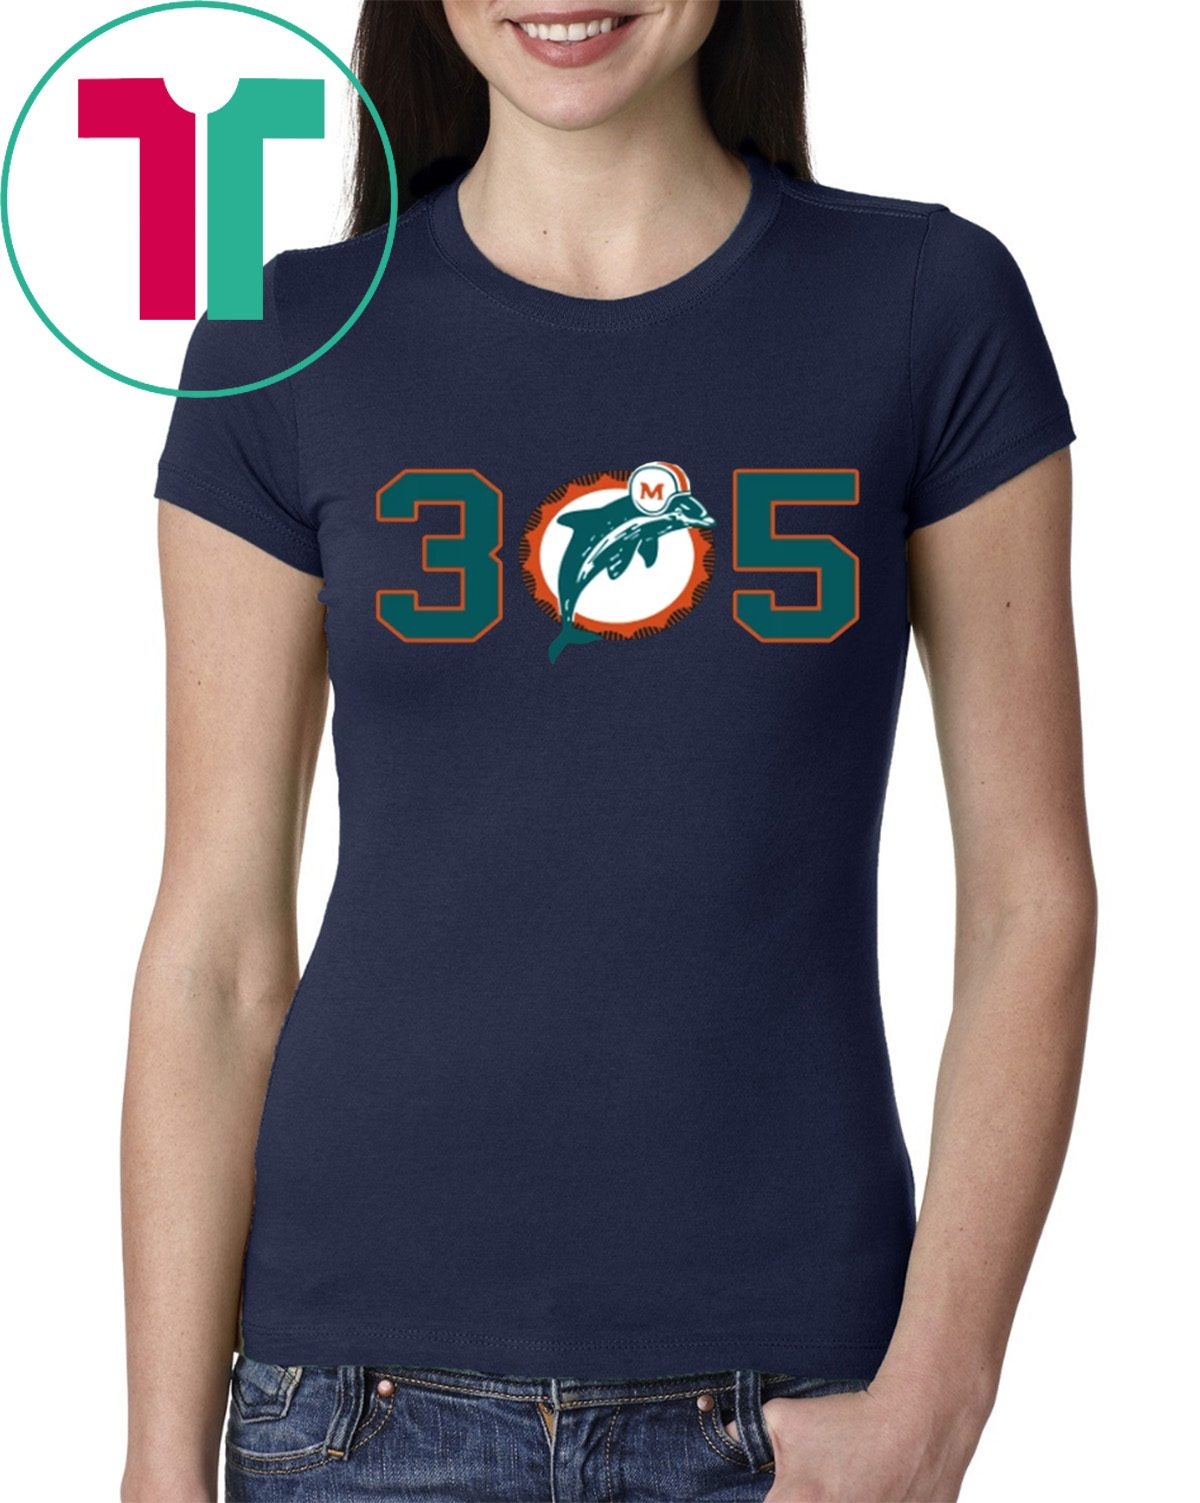 305 Miami Dolphins Shirt